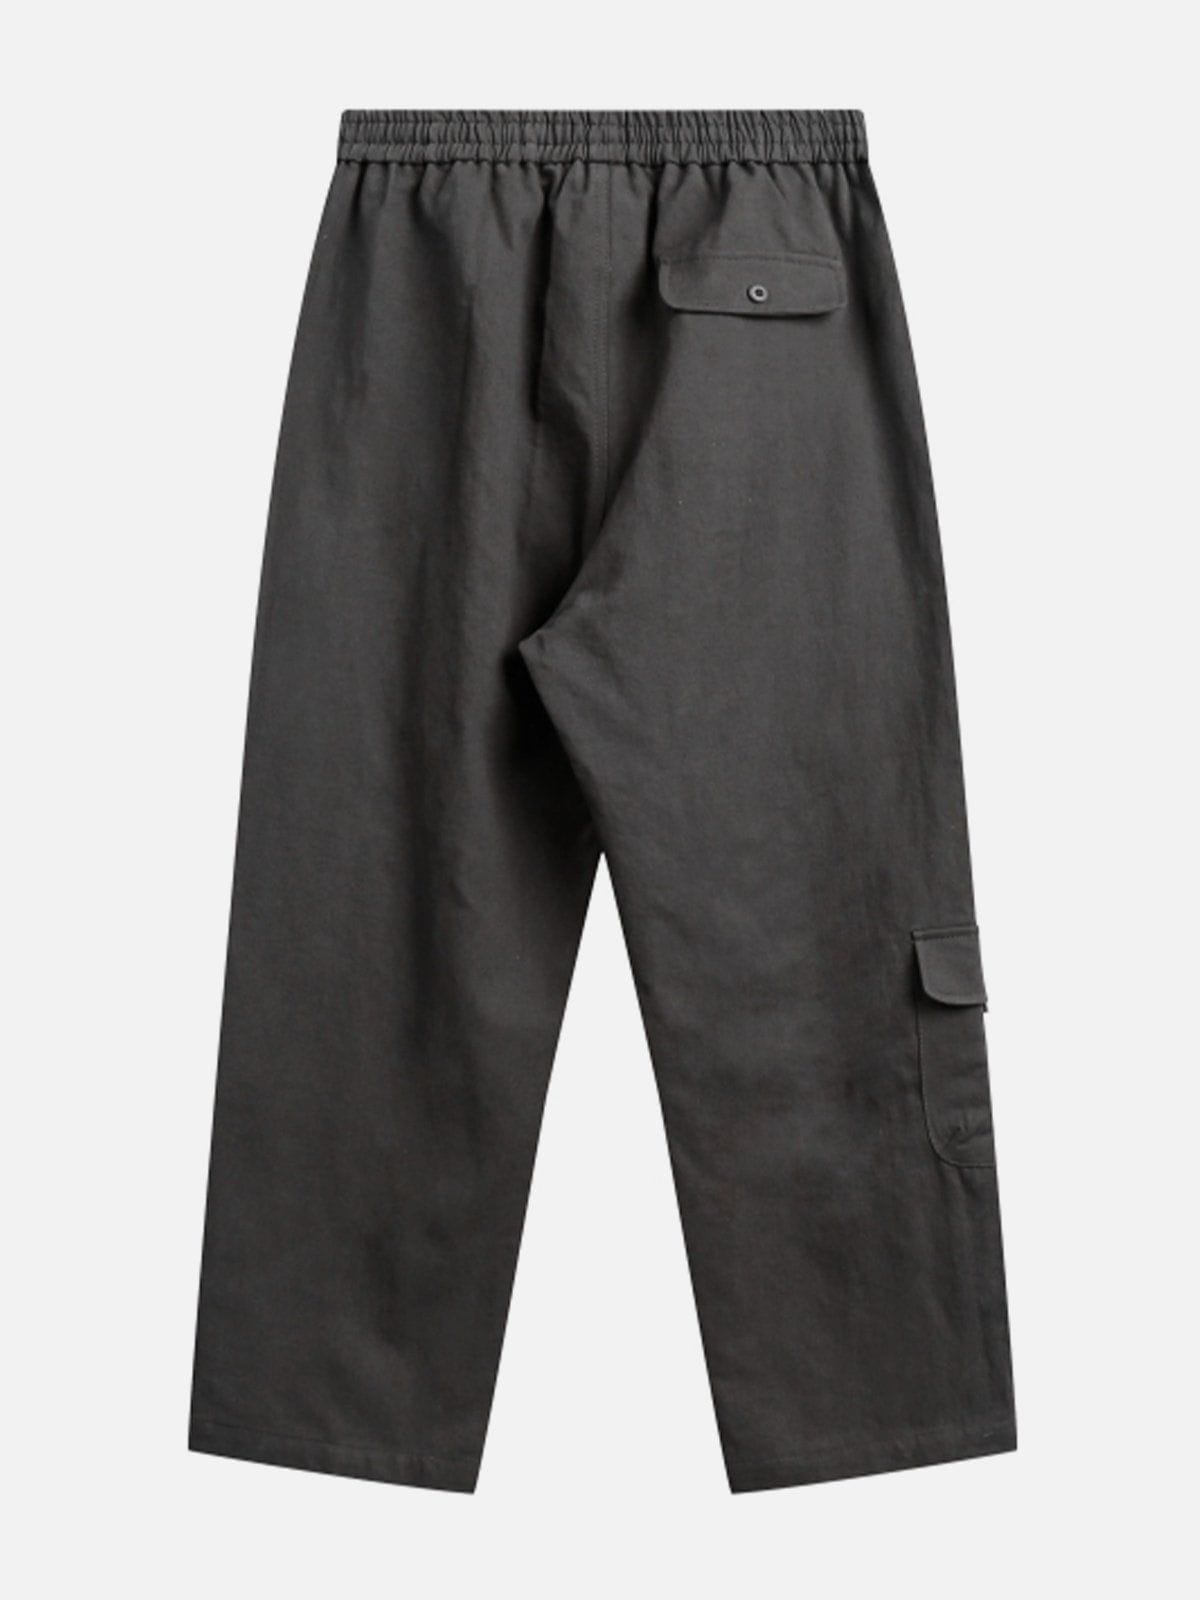 Sneakerland® - Irregular Pocket Design Cargo Pants